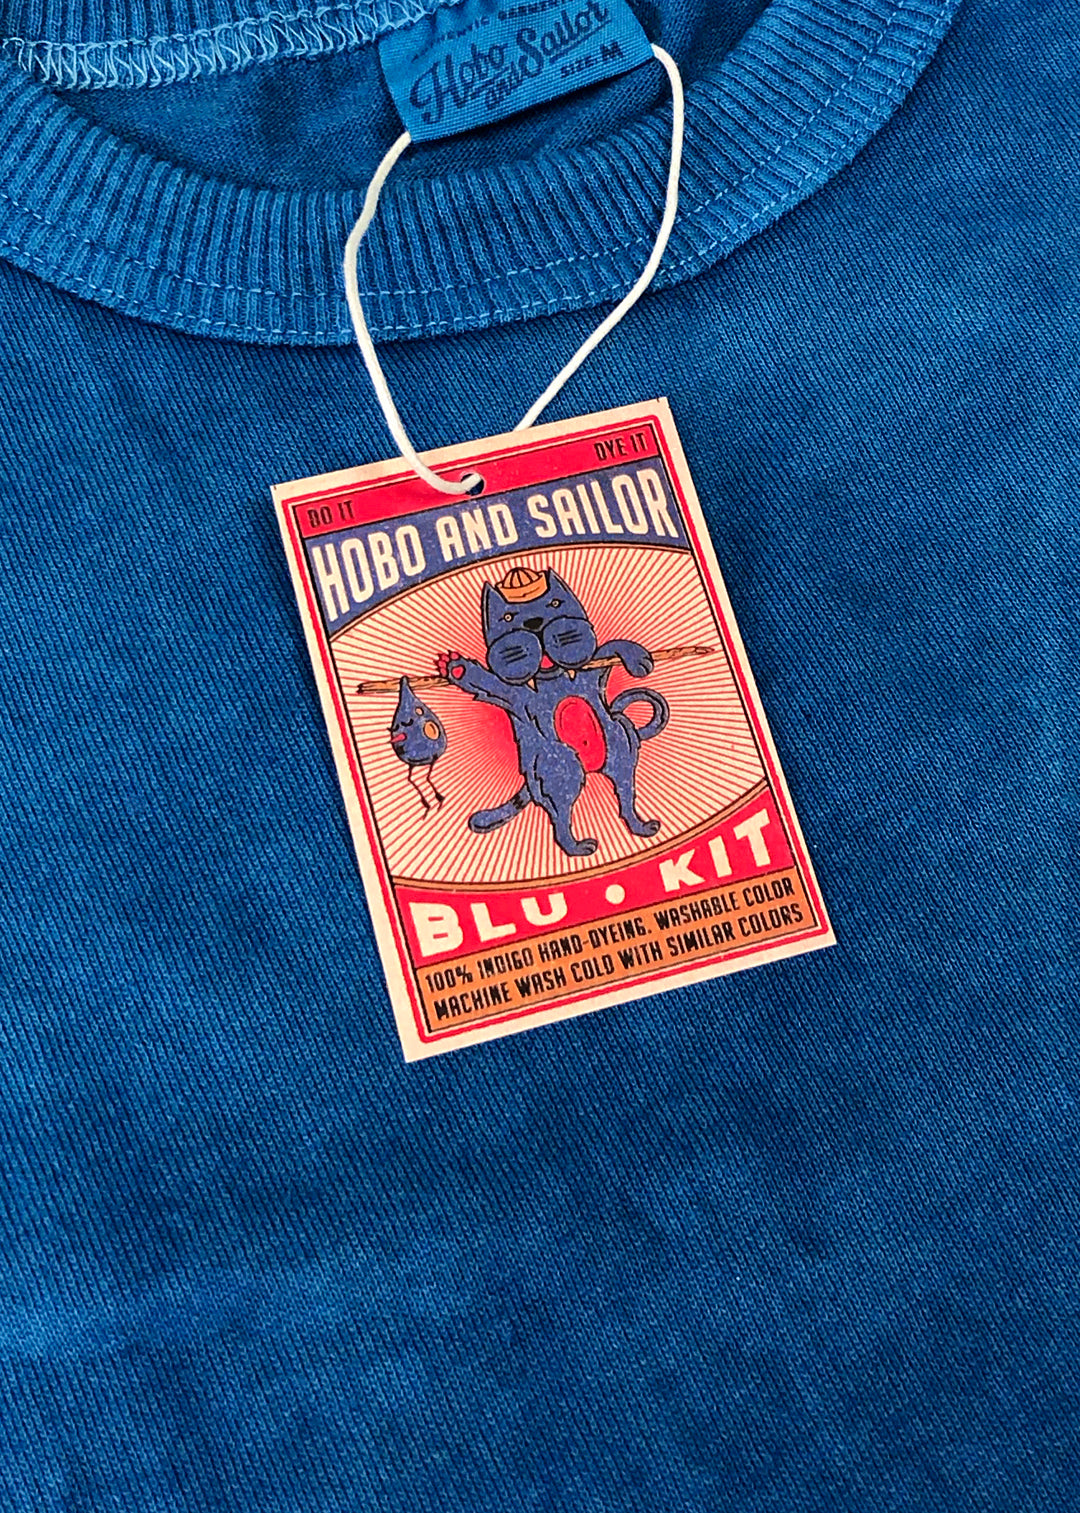 BLU KIT x HOBO AND SAILOR. Indigo T-shirt